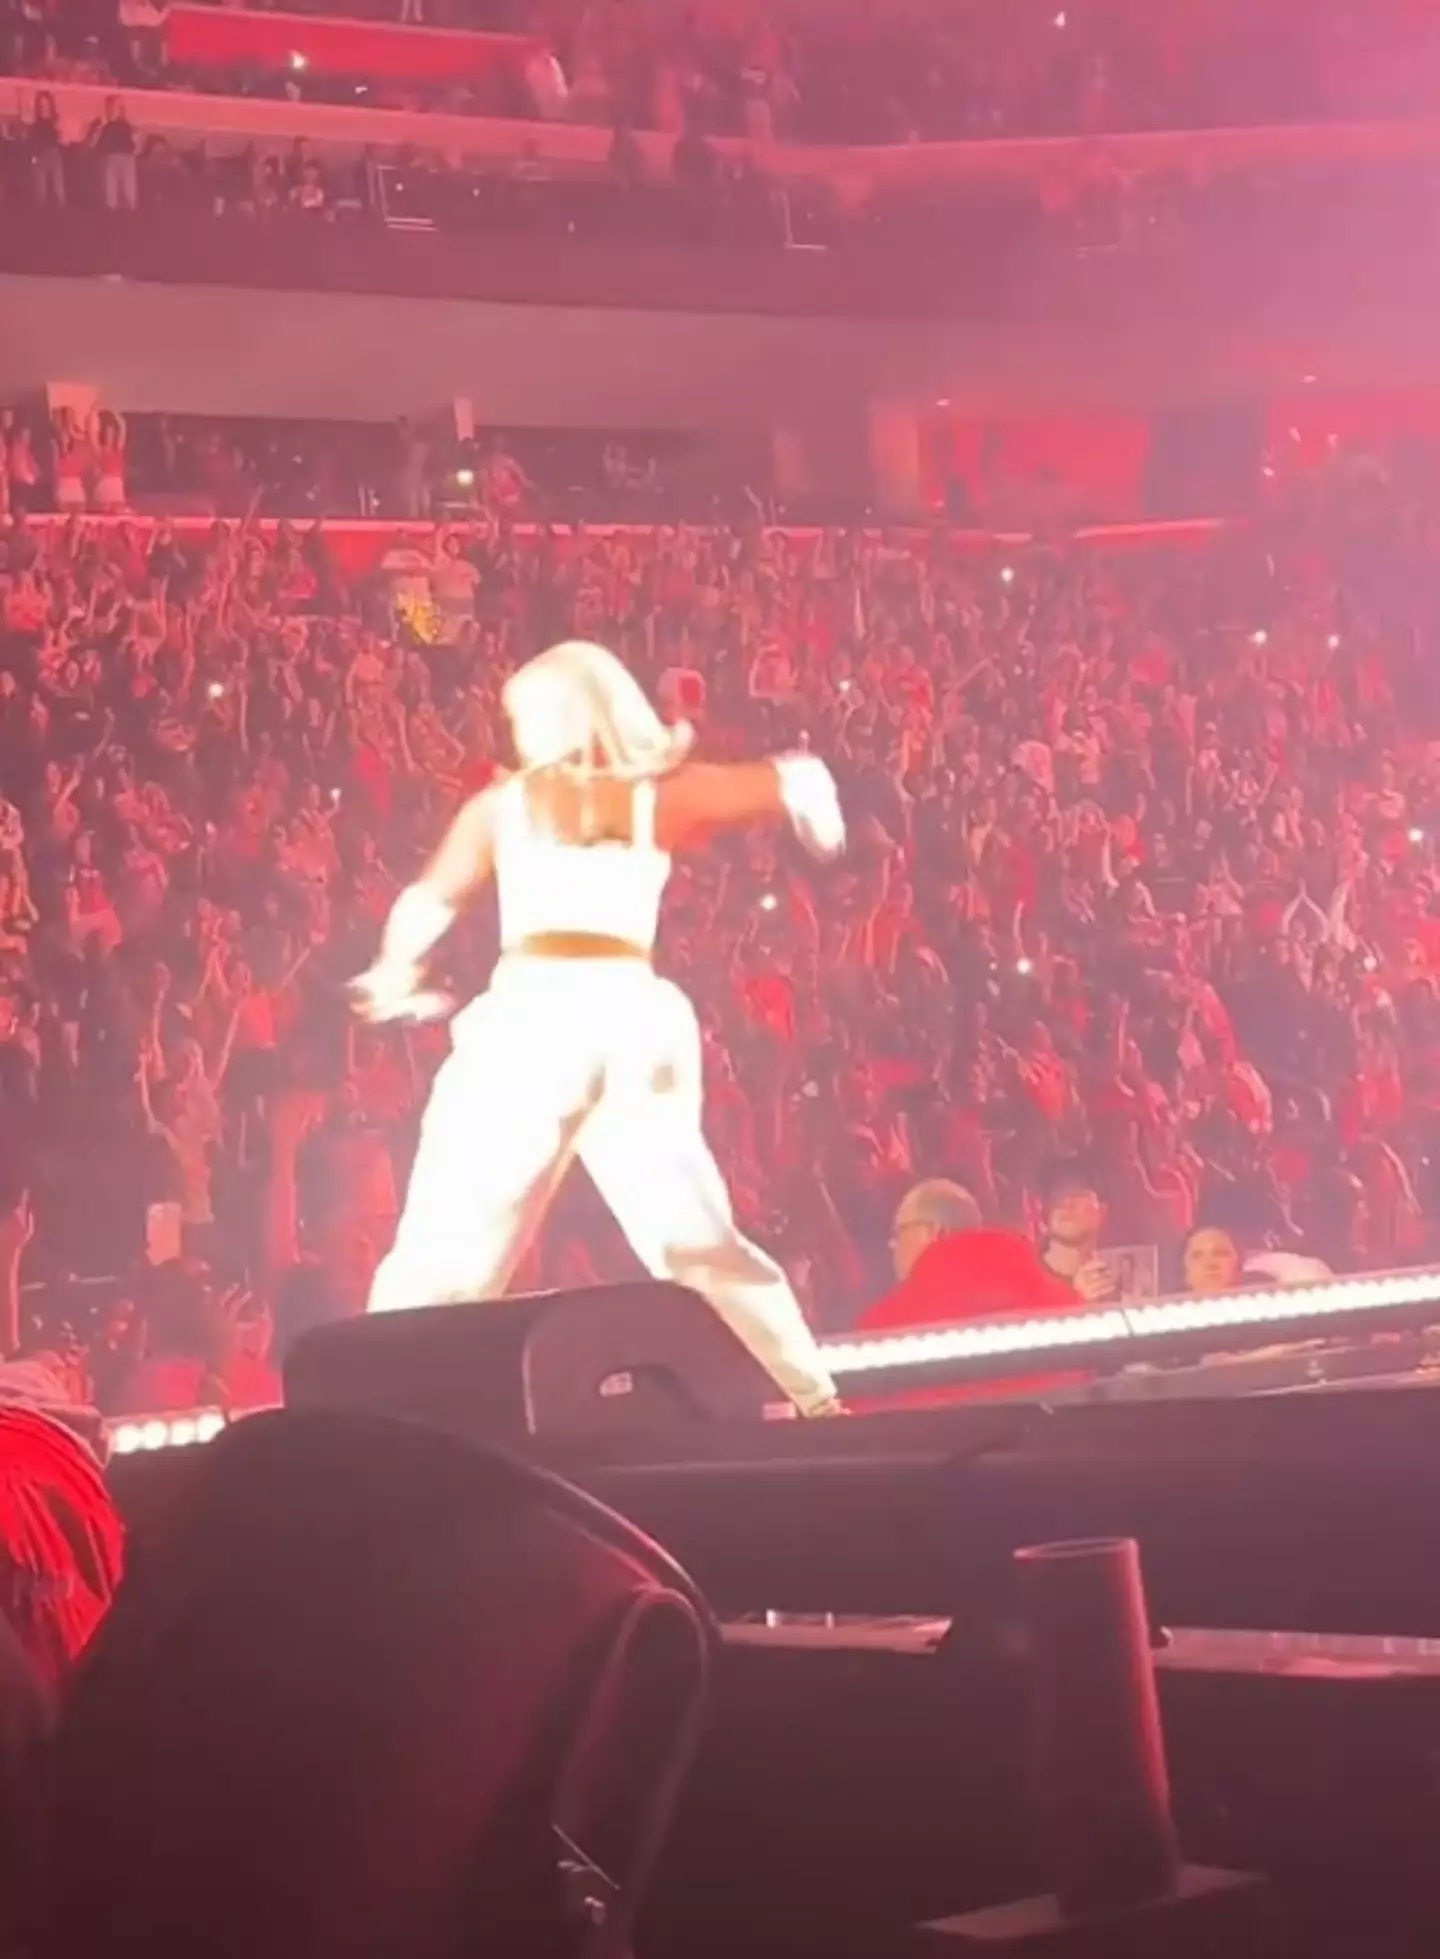 Nicki Minaj threw an item back into the crowd after a fan threw it on stage. (TikTok/@itsneshaaa)